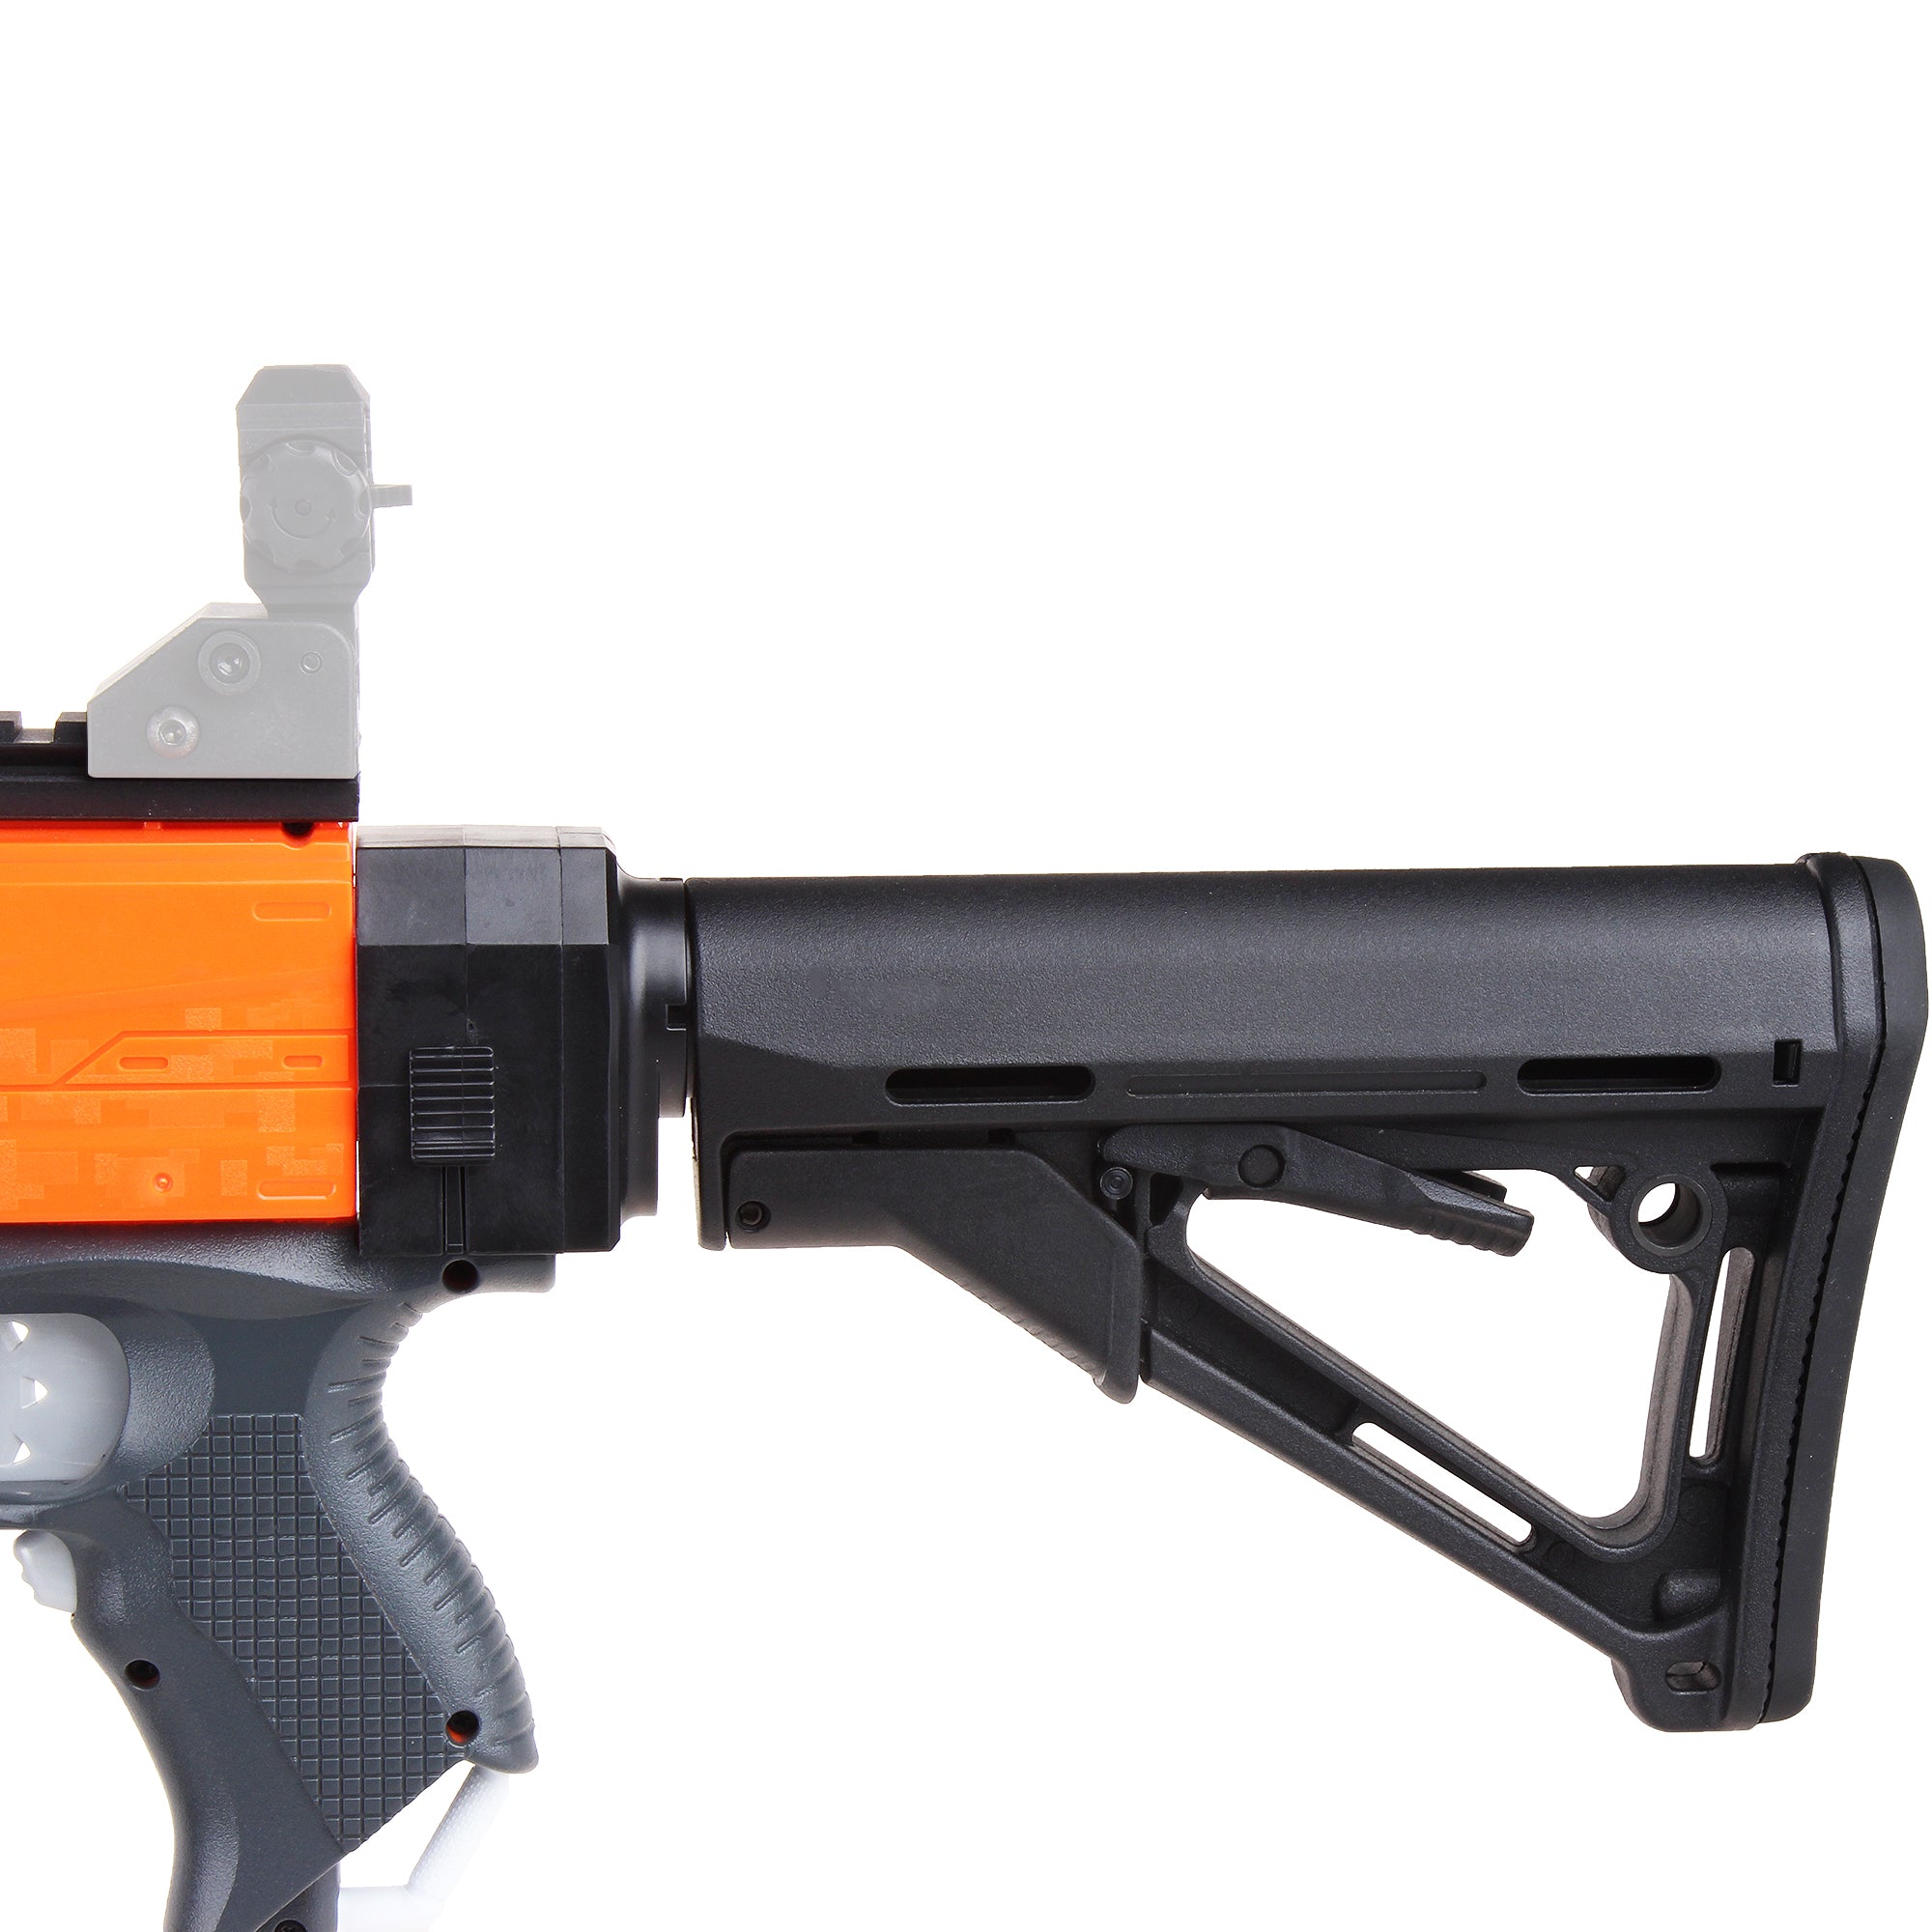 Worker Mod DIY Imitation Kits G56 B Combo 13 Items for Nerf Stryfe Modify Toy - BlasterMOD